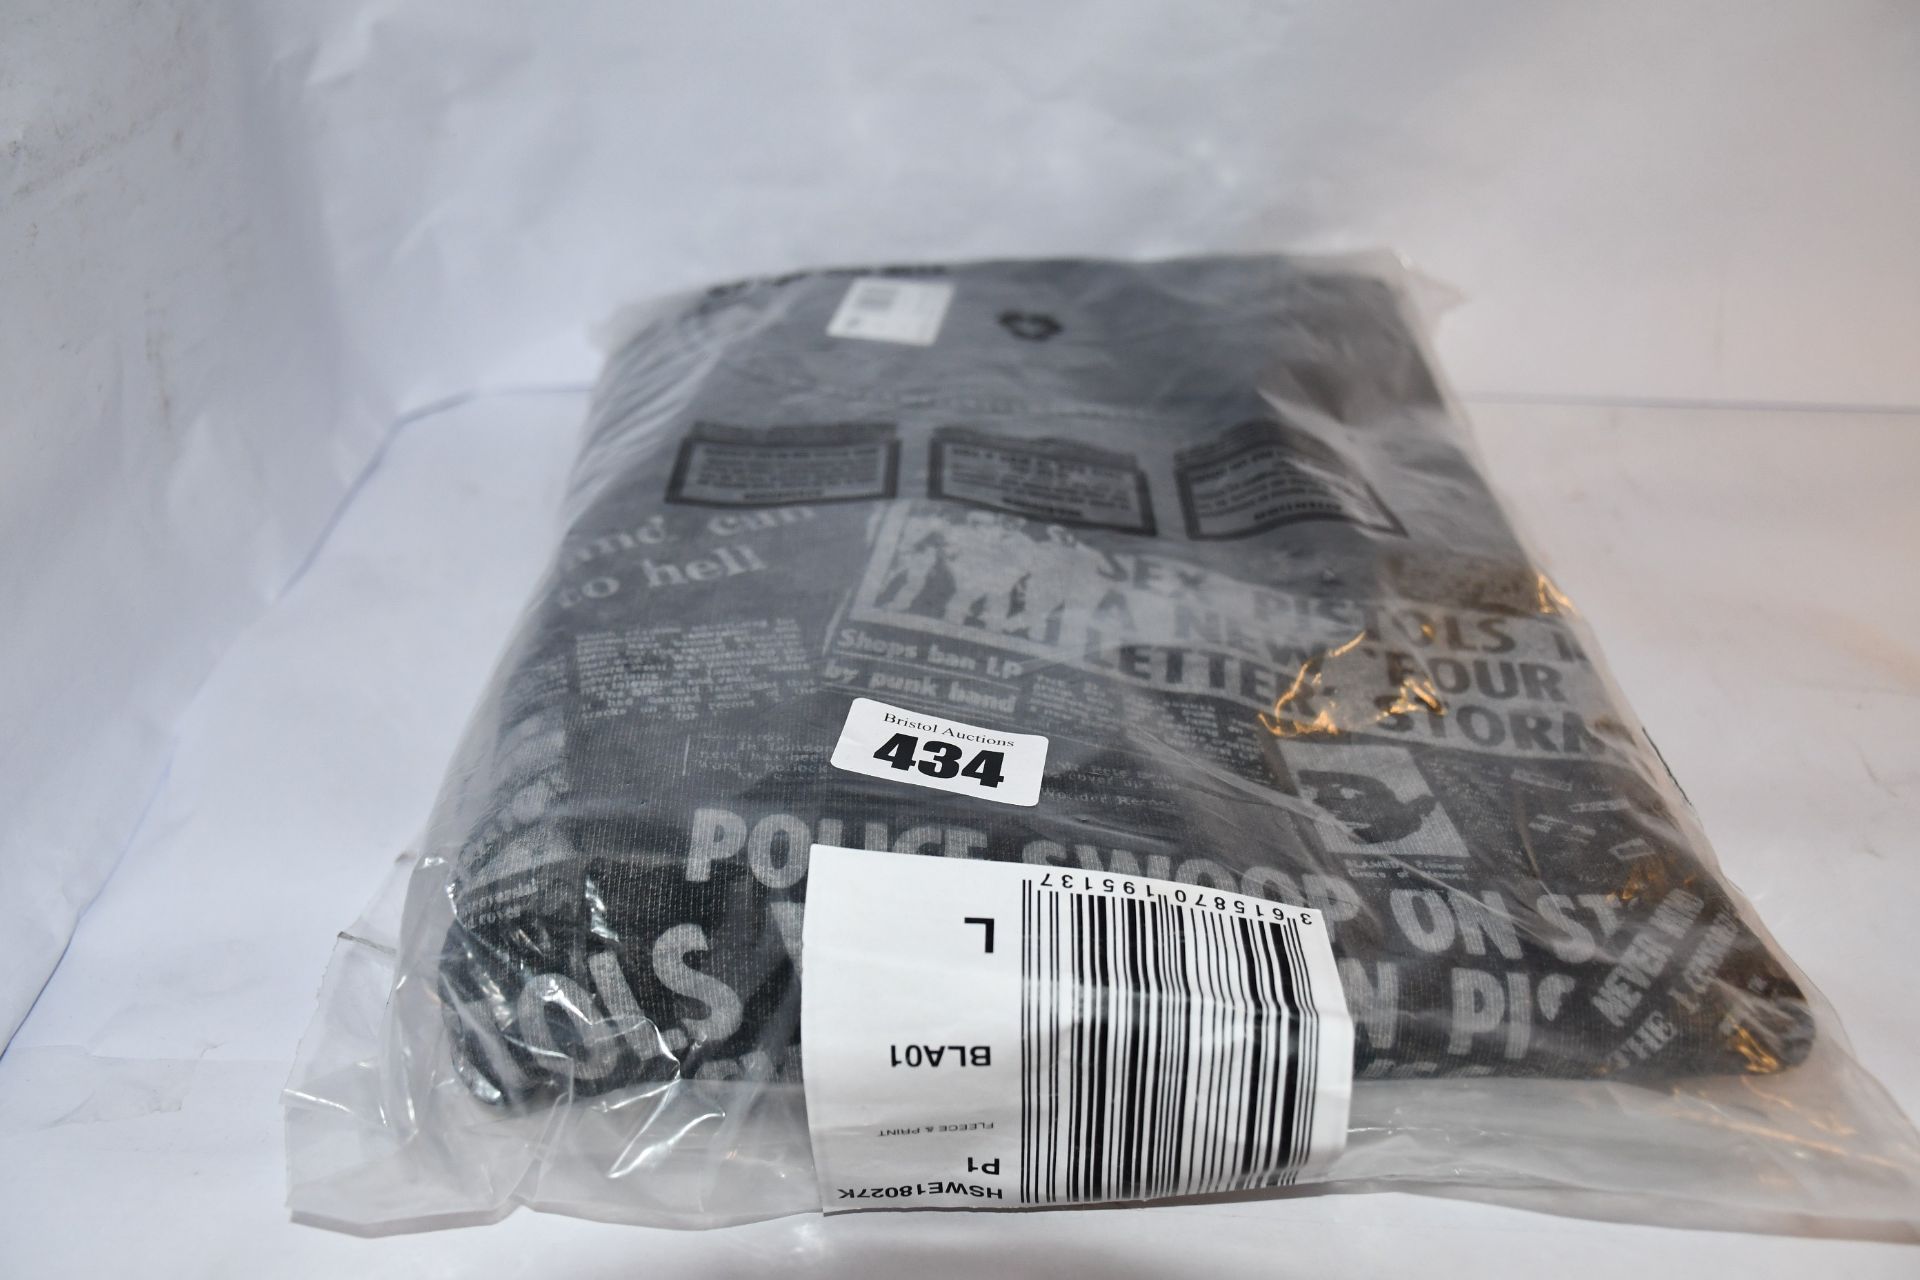 An as new The Kooples Sex Pistols sweatshirt (L - RRP €168).